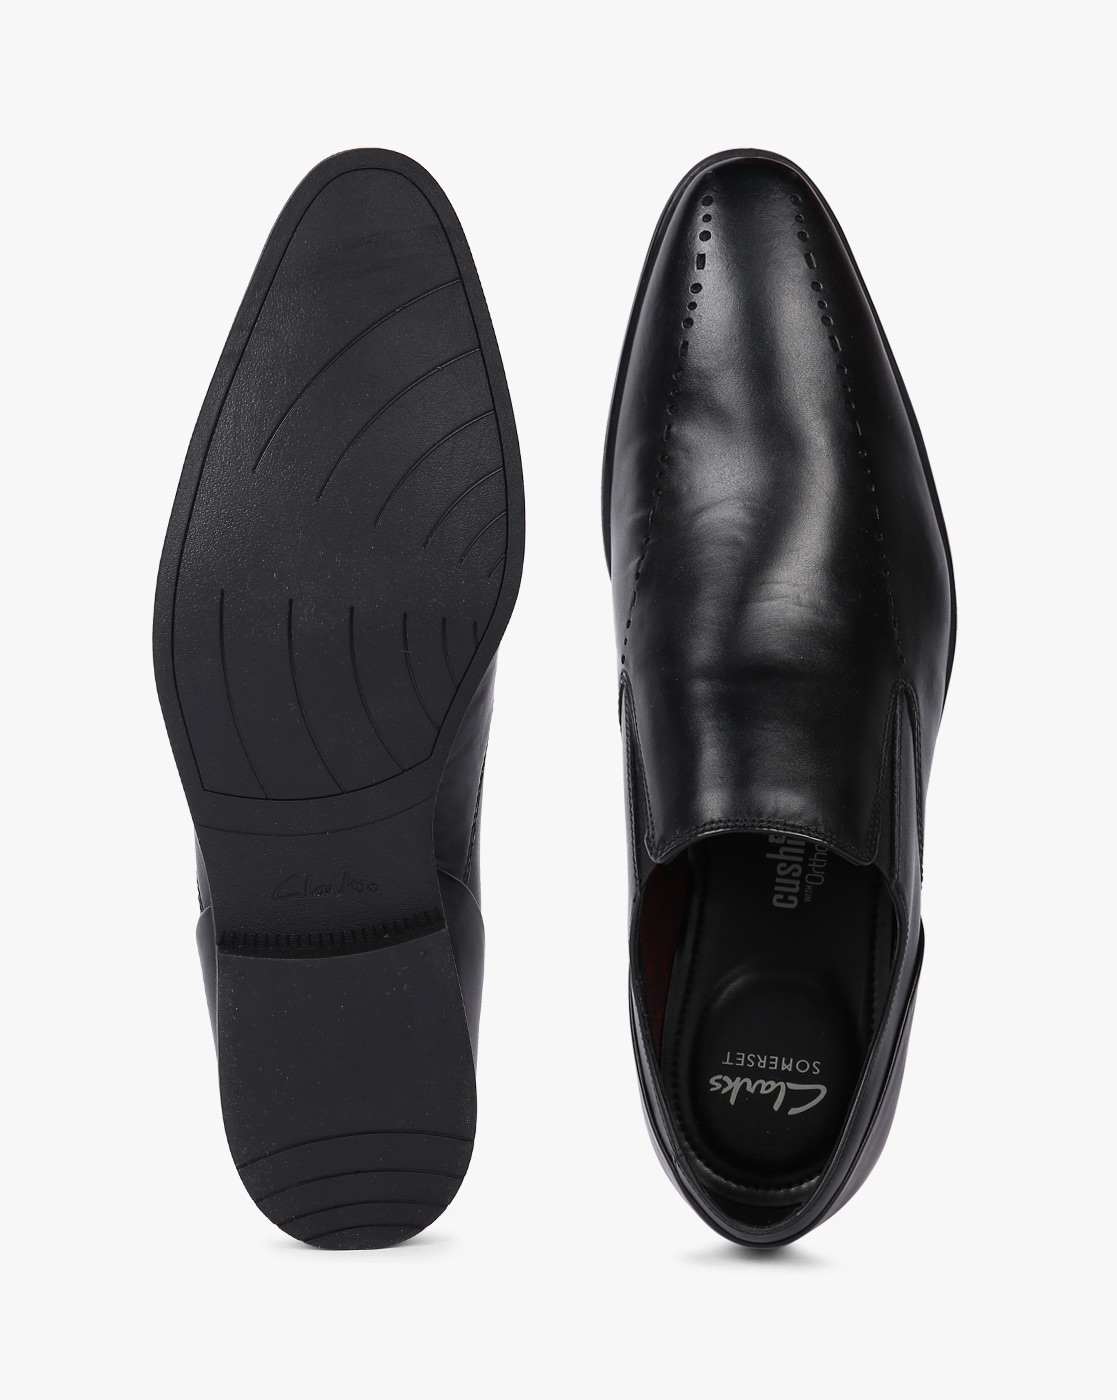 Black Formal Shoes for Men by CLARKS 